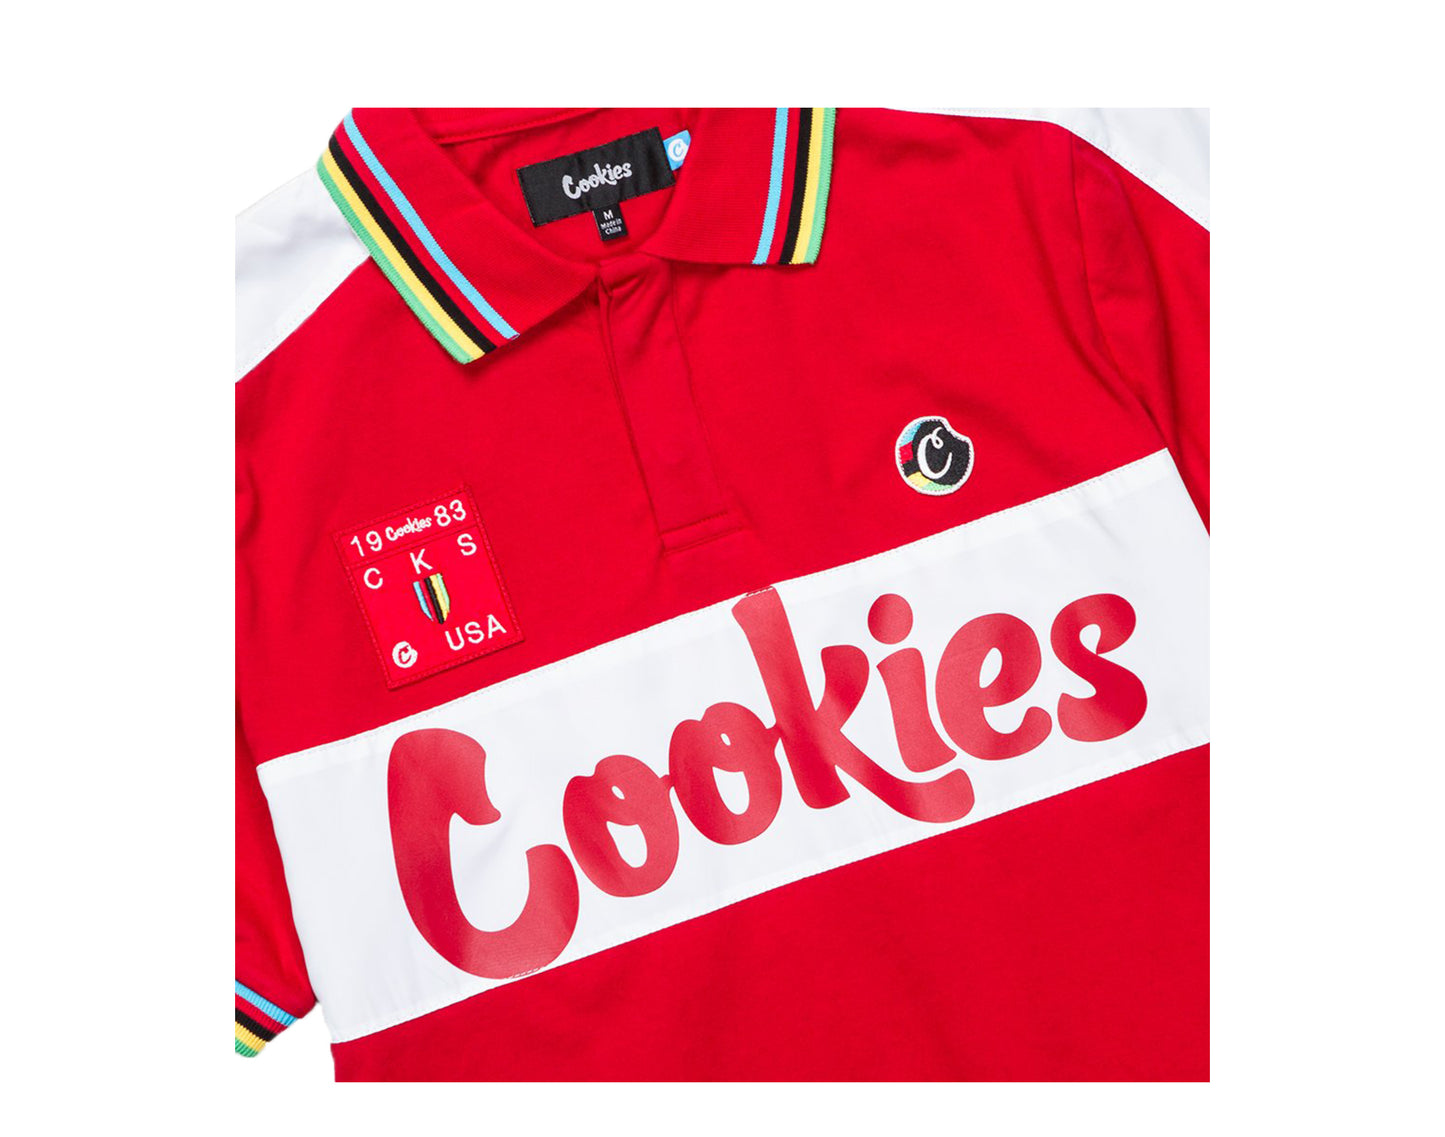 Cookies Tour De Fire Cotton Jersey Red Polo Men's Shirt 1543K3974-RED